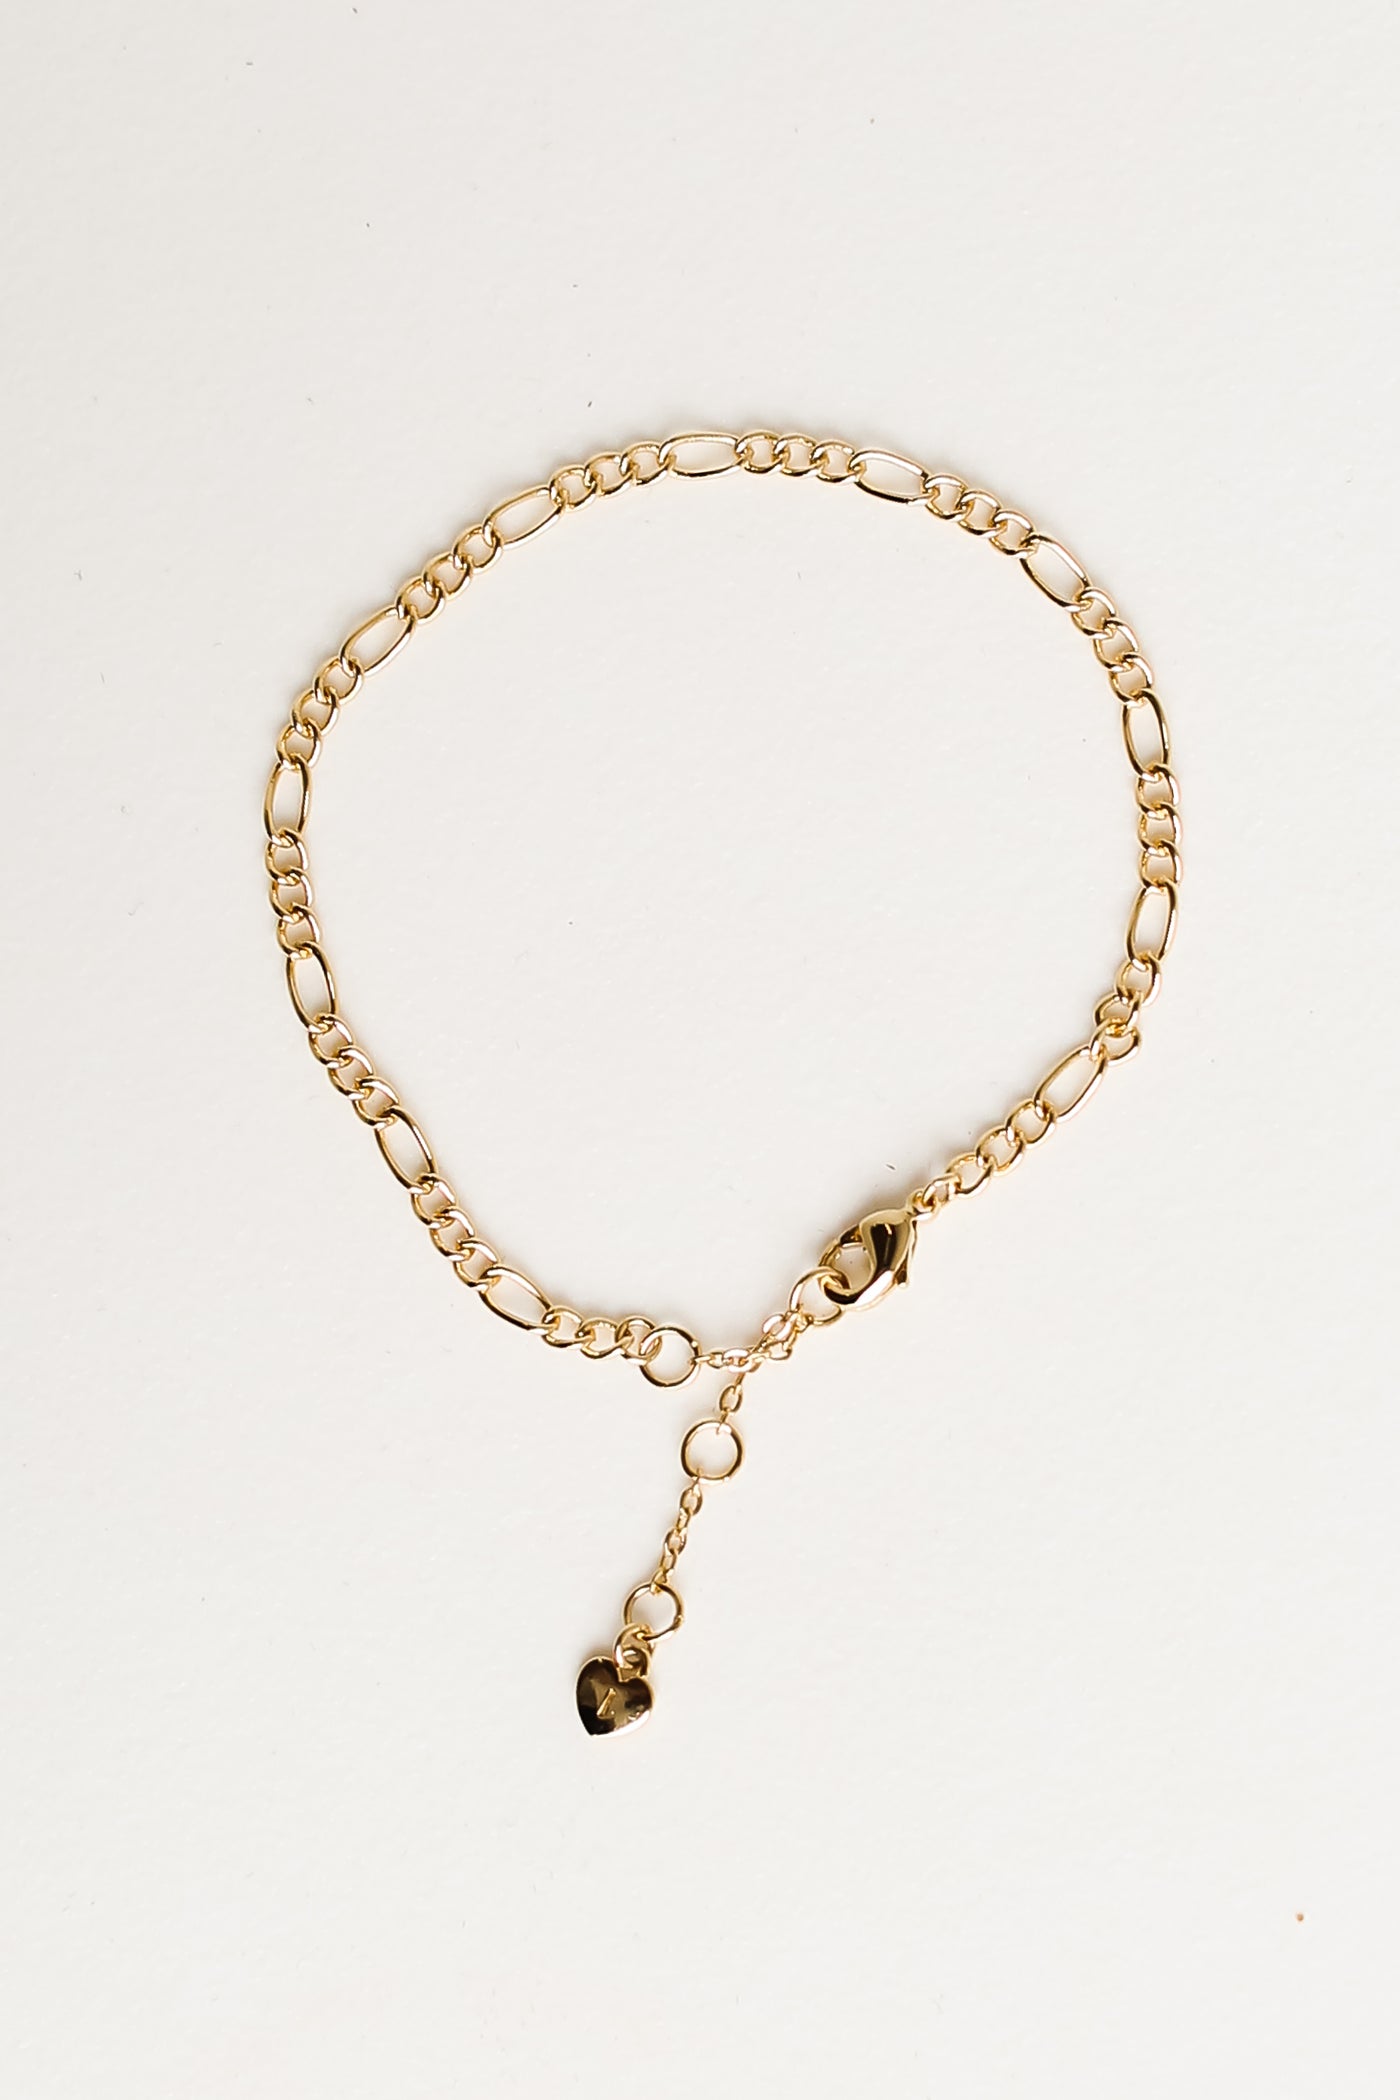 Gold Chainlink Bracelet flat lay